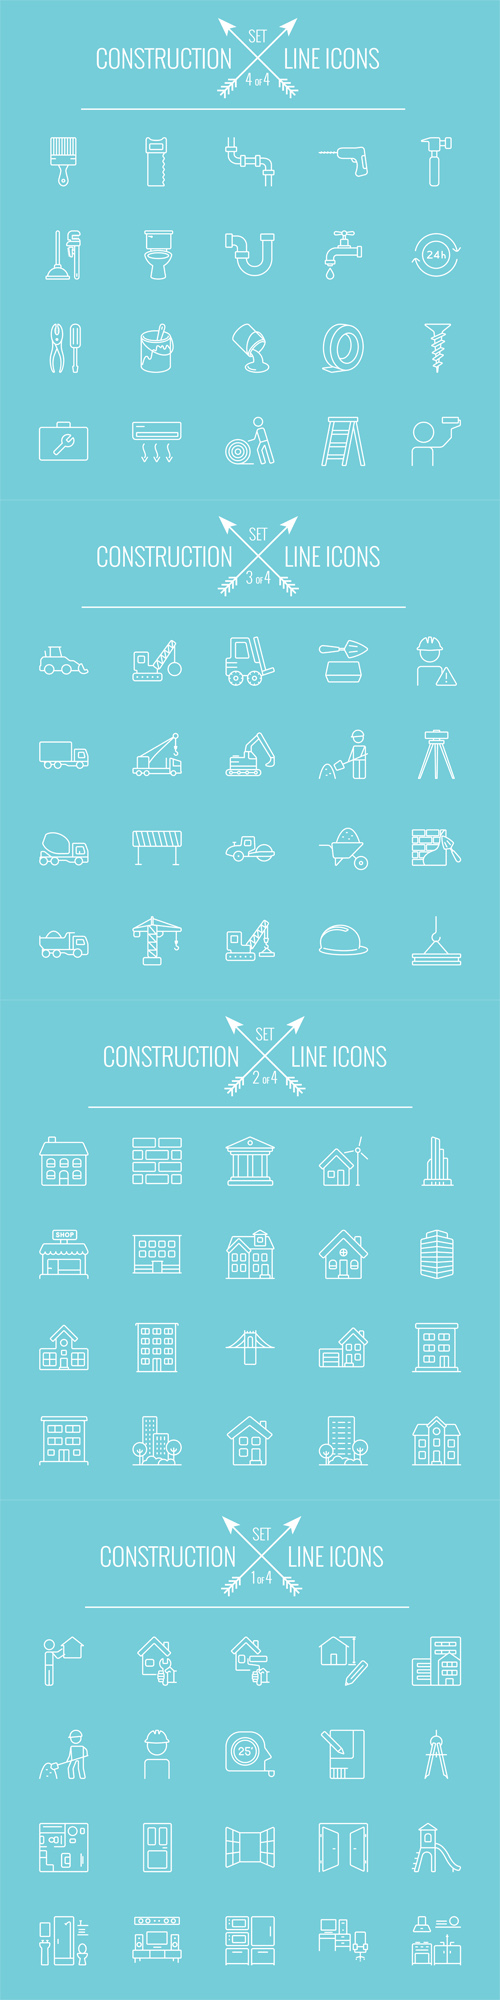 Construction icon set - Vectors